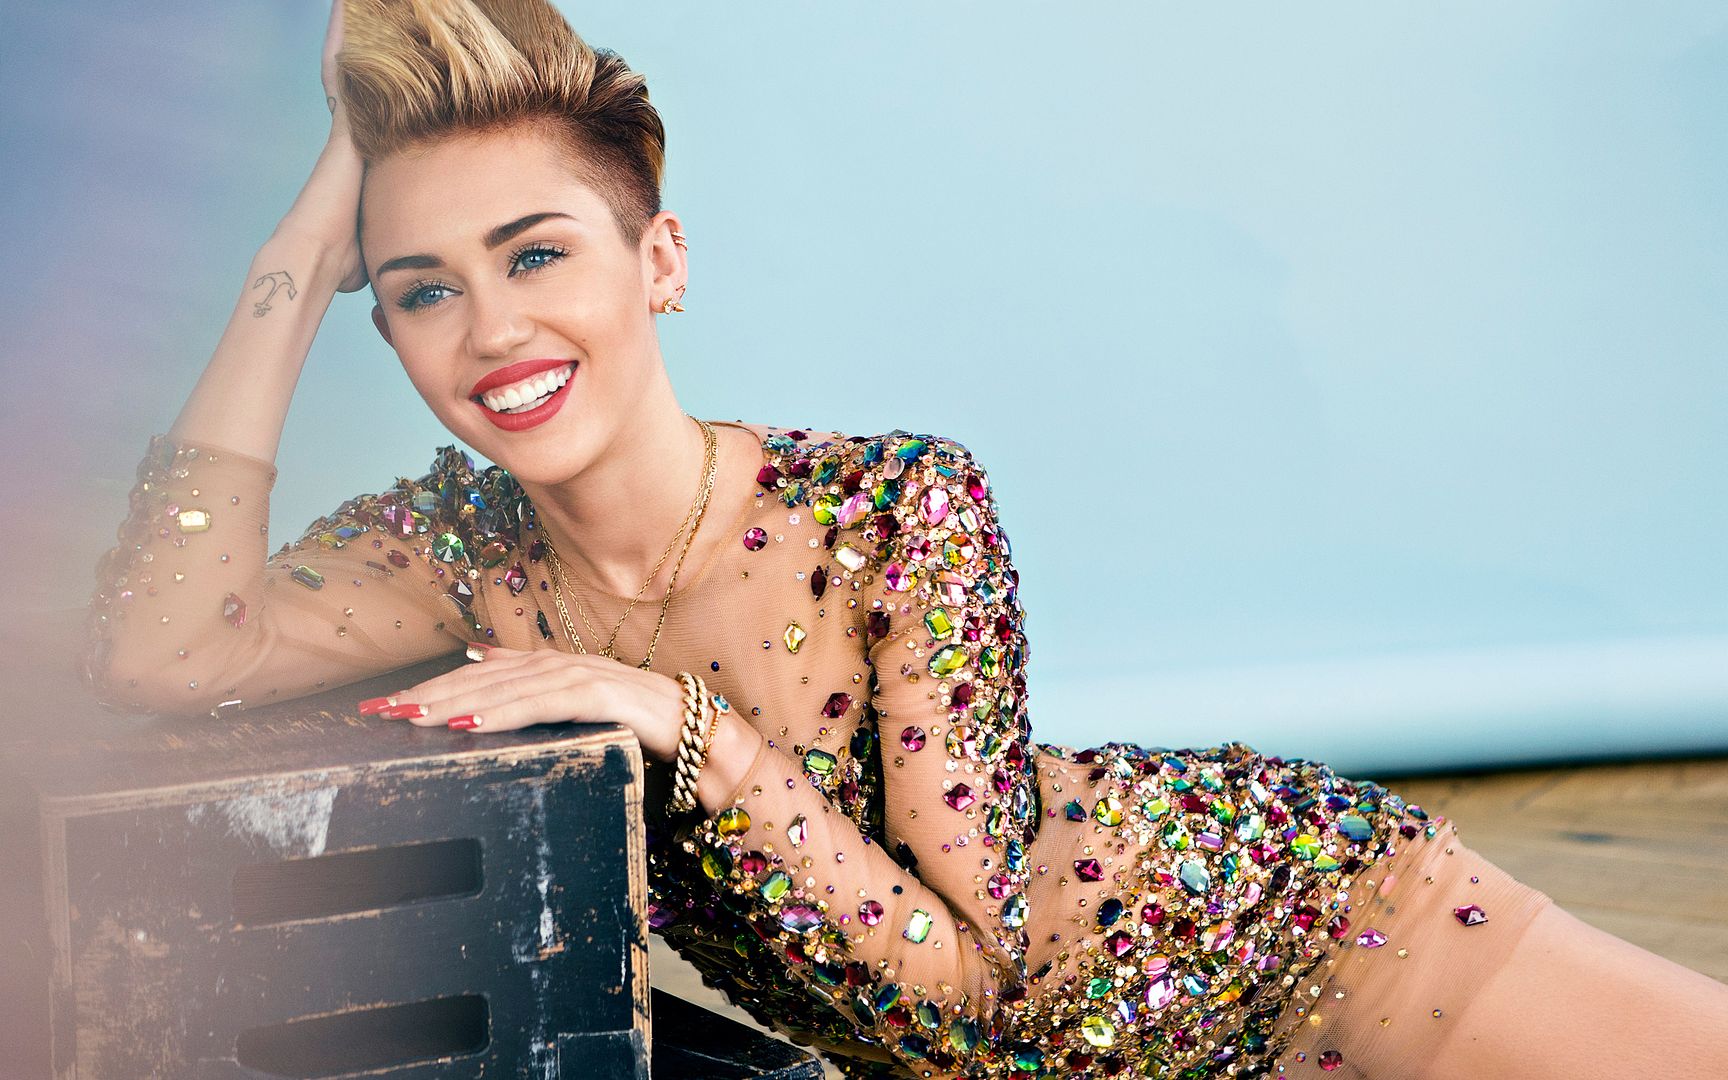 Miley Cyrus photo miley_cyrus_2014-wide_1.jpg